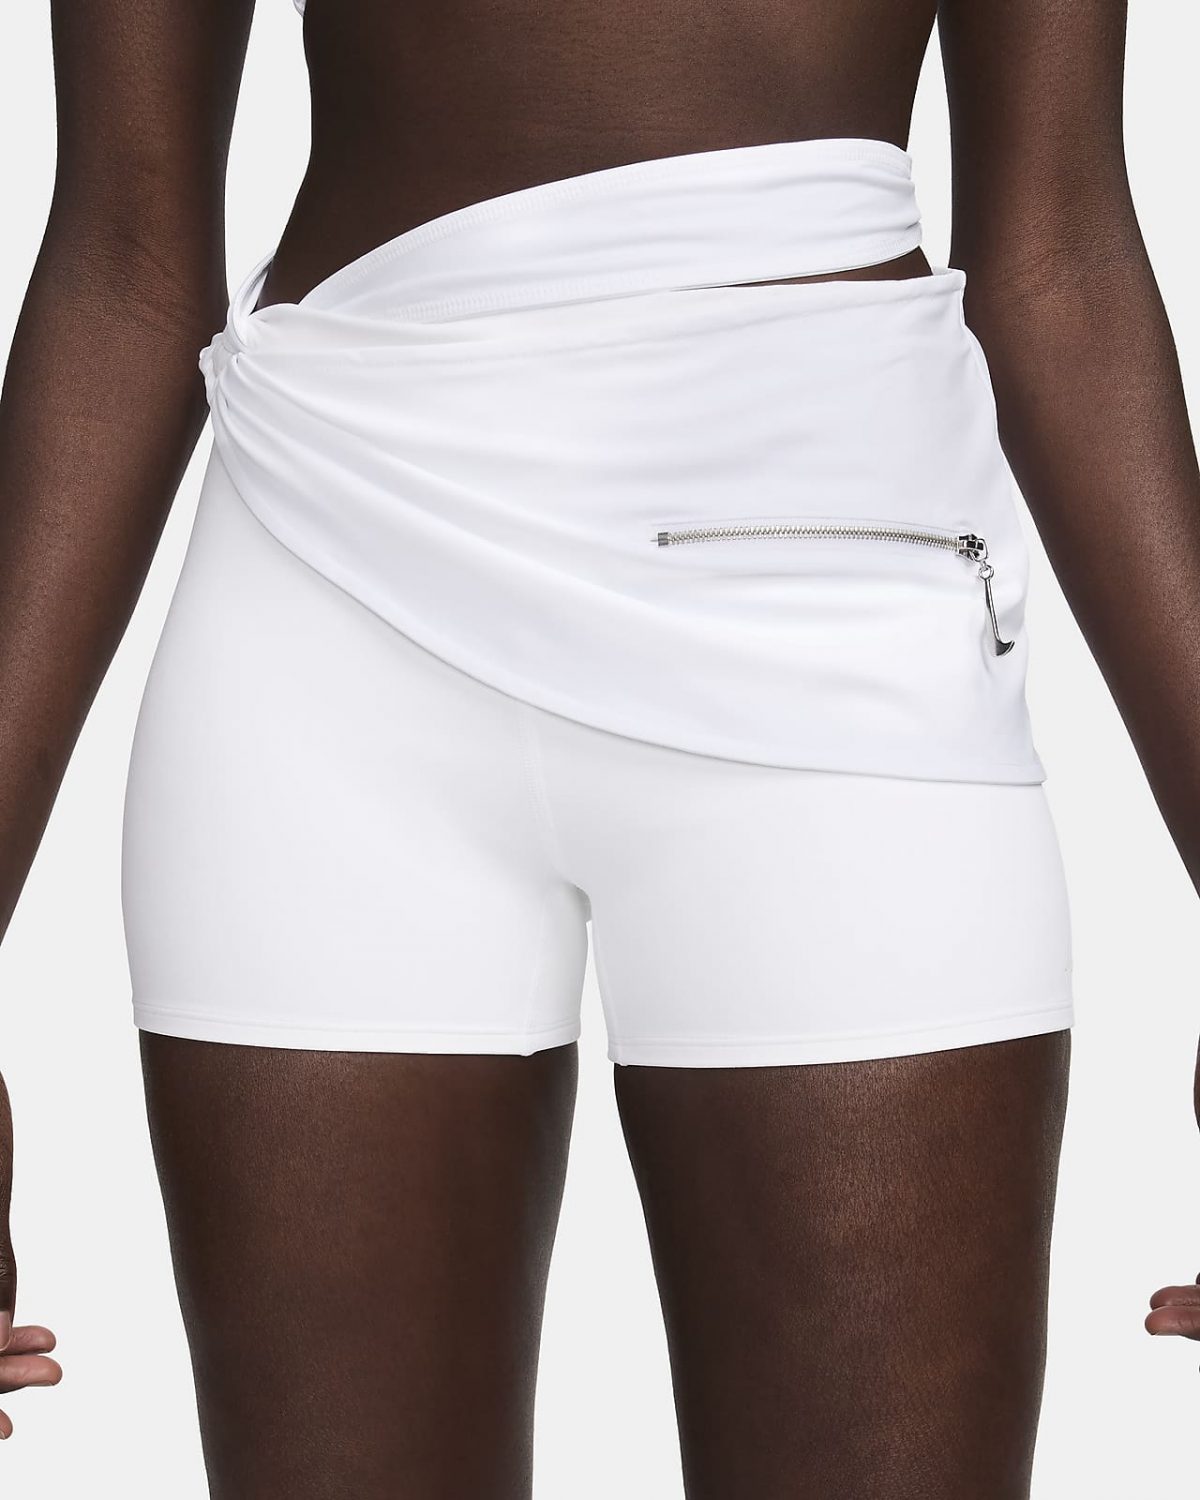 Женские шорты Nike x Jacquemus белые фотография